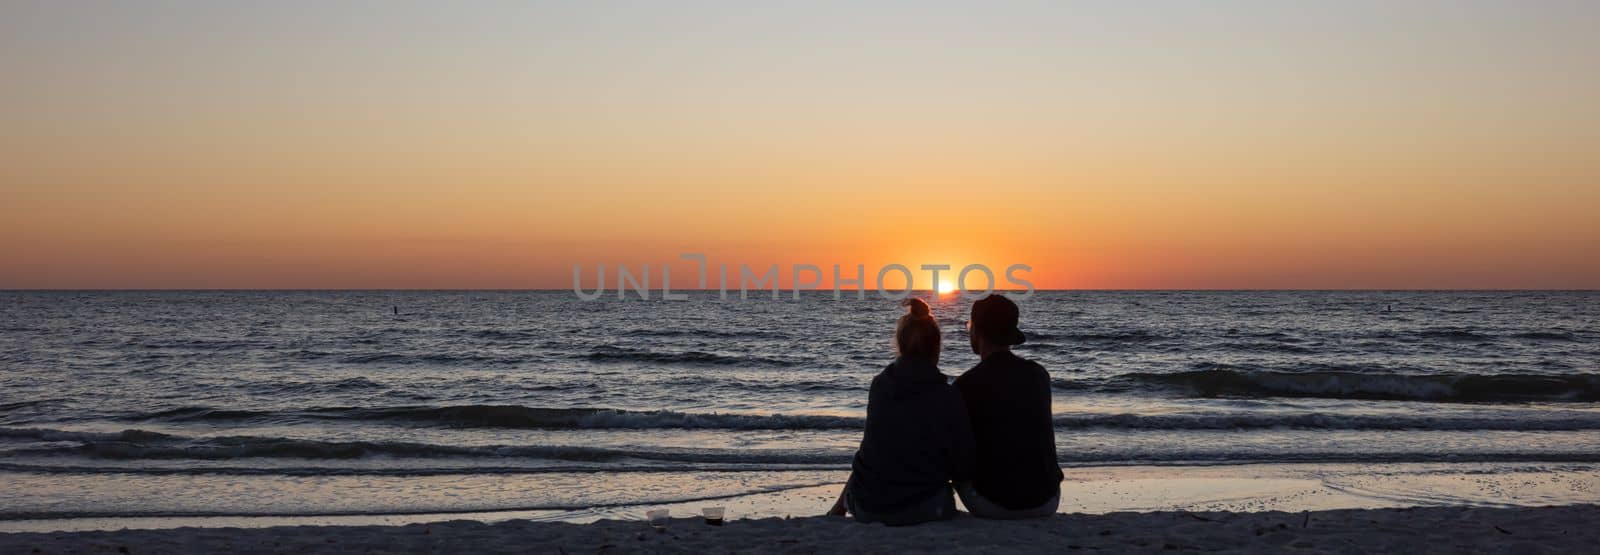 Beach lovers watching the sunset sitting on a sandy beach by palinchak